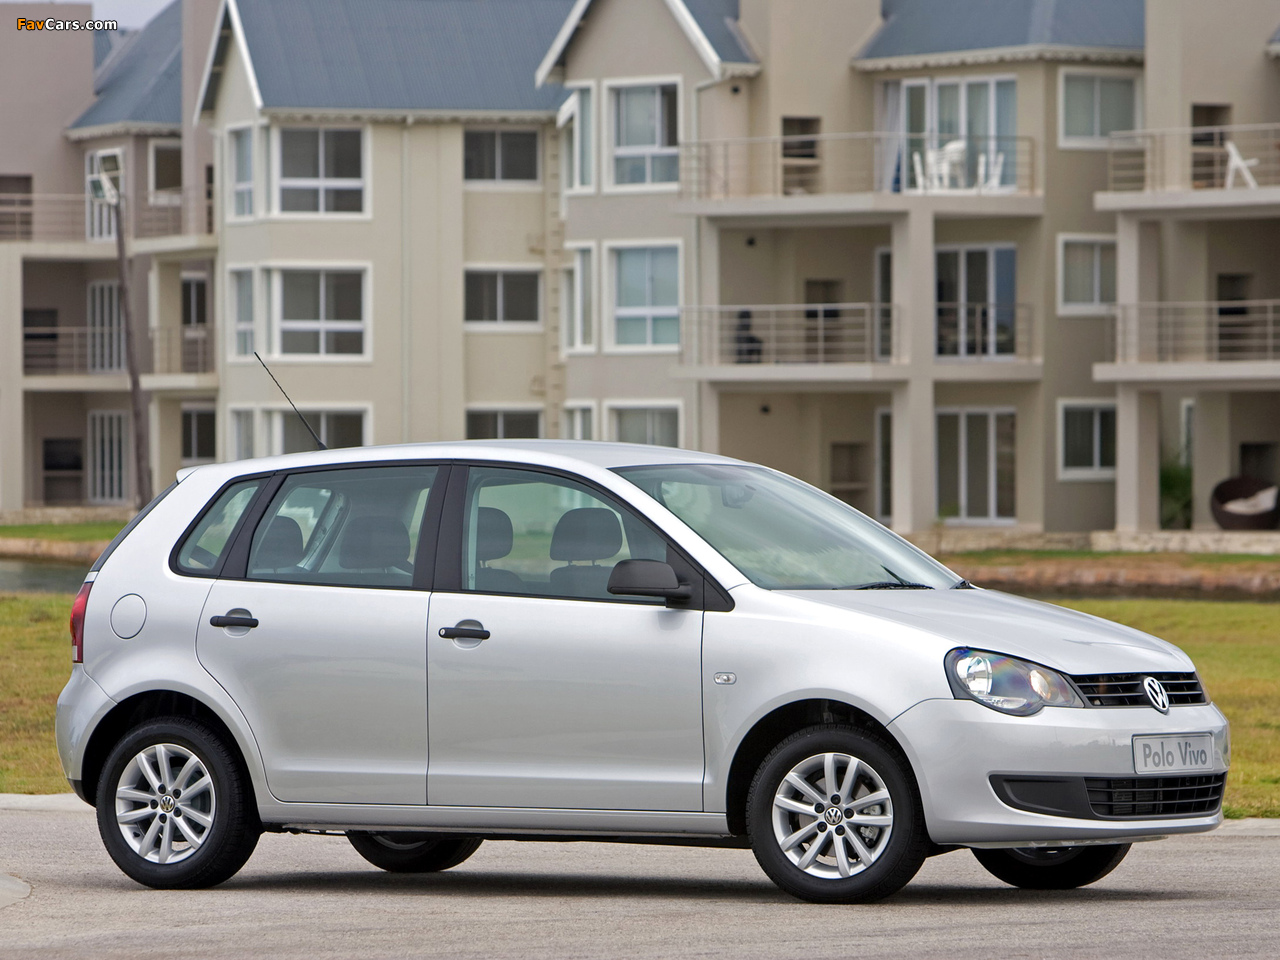 Volkswagen Polo Vivo Hatchback (IVf) 2010 pictures (1280 x 960)